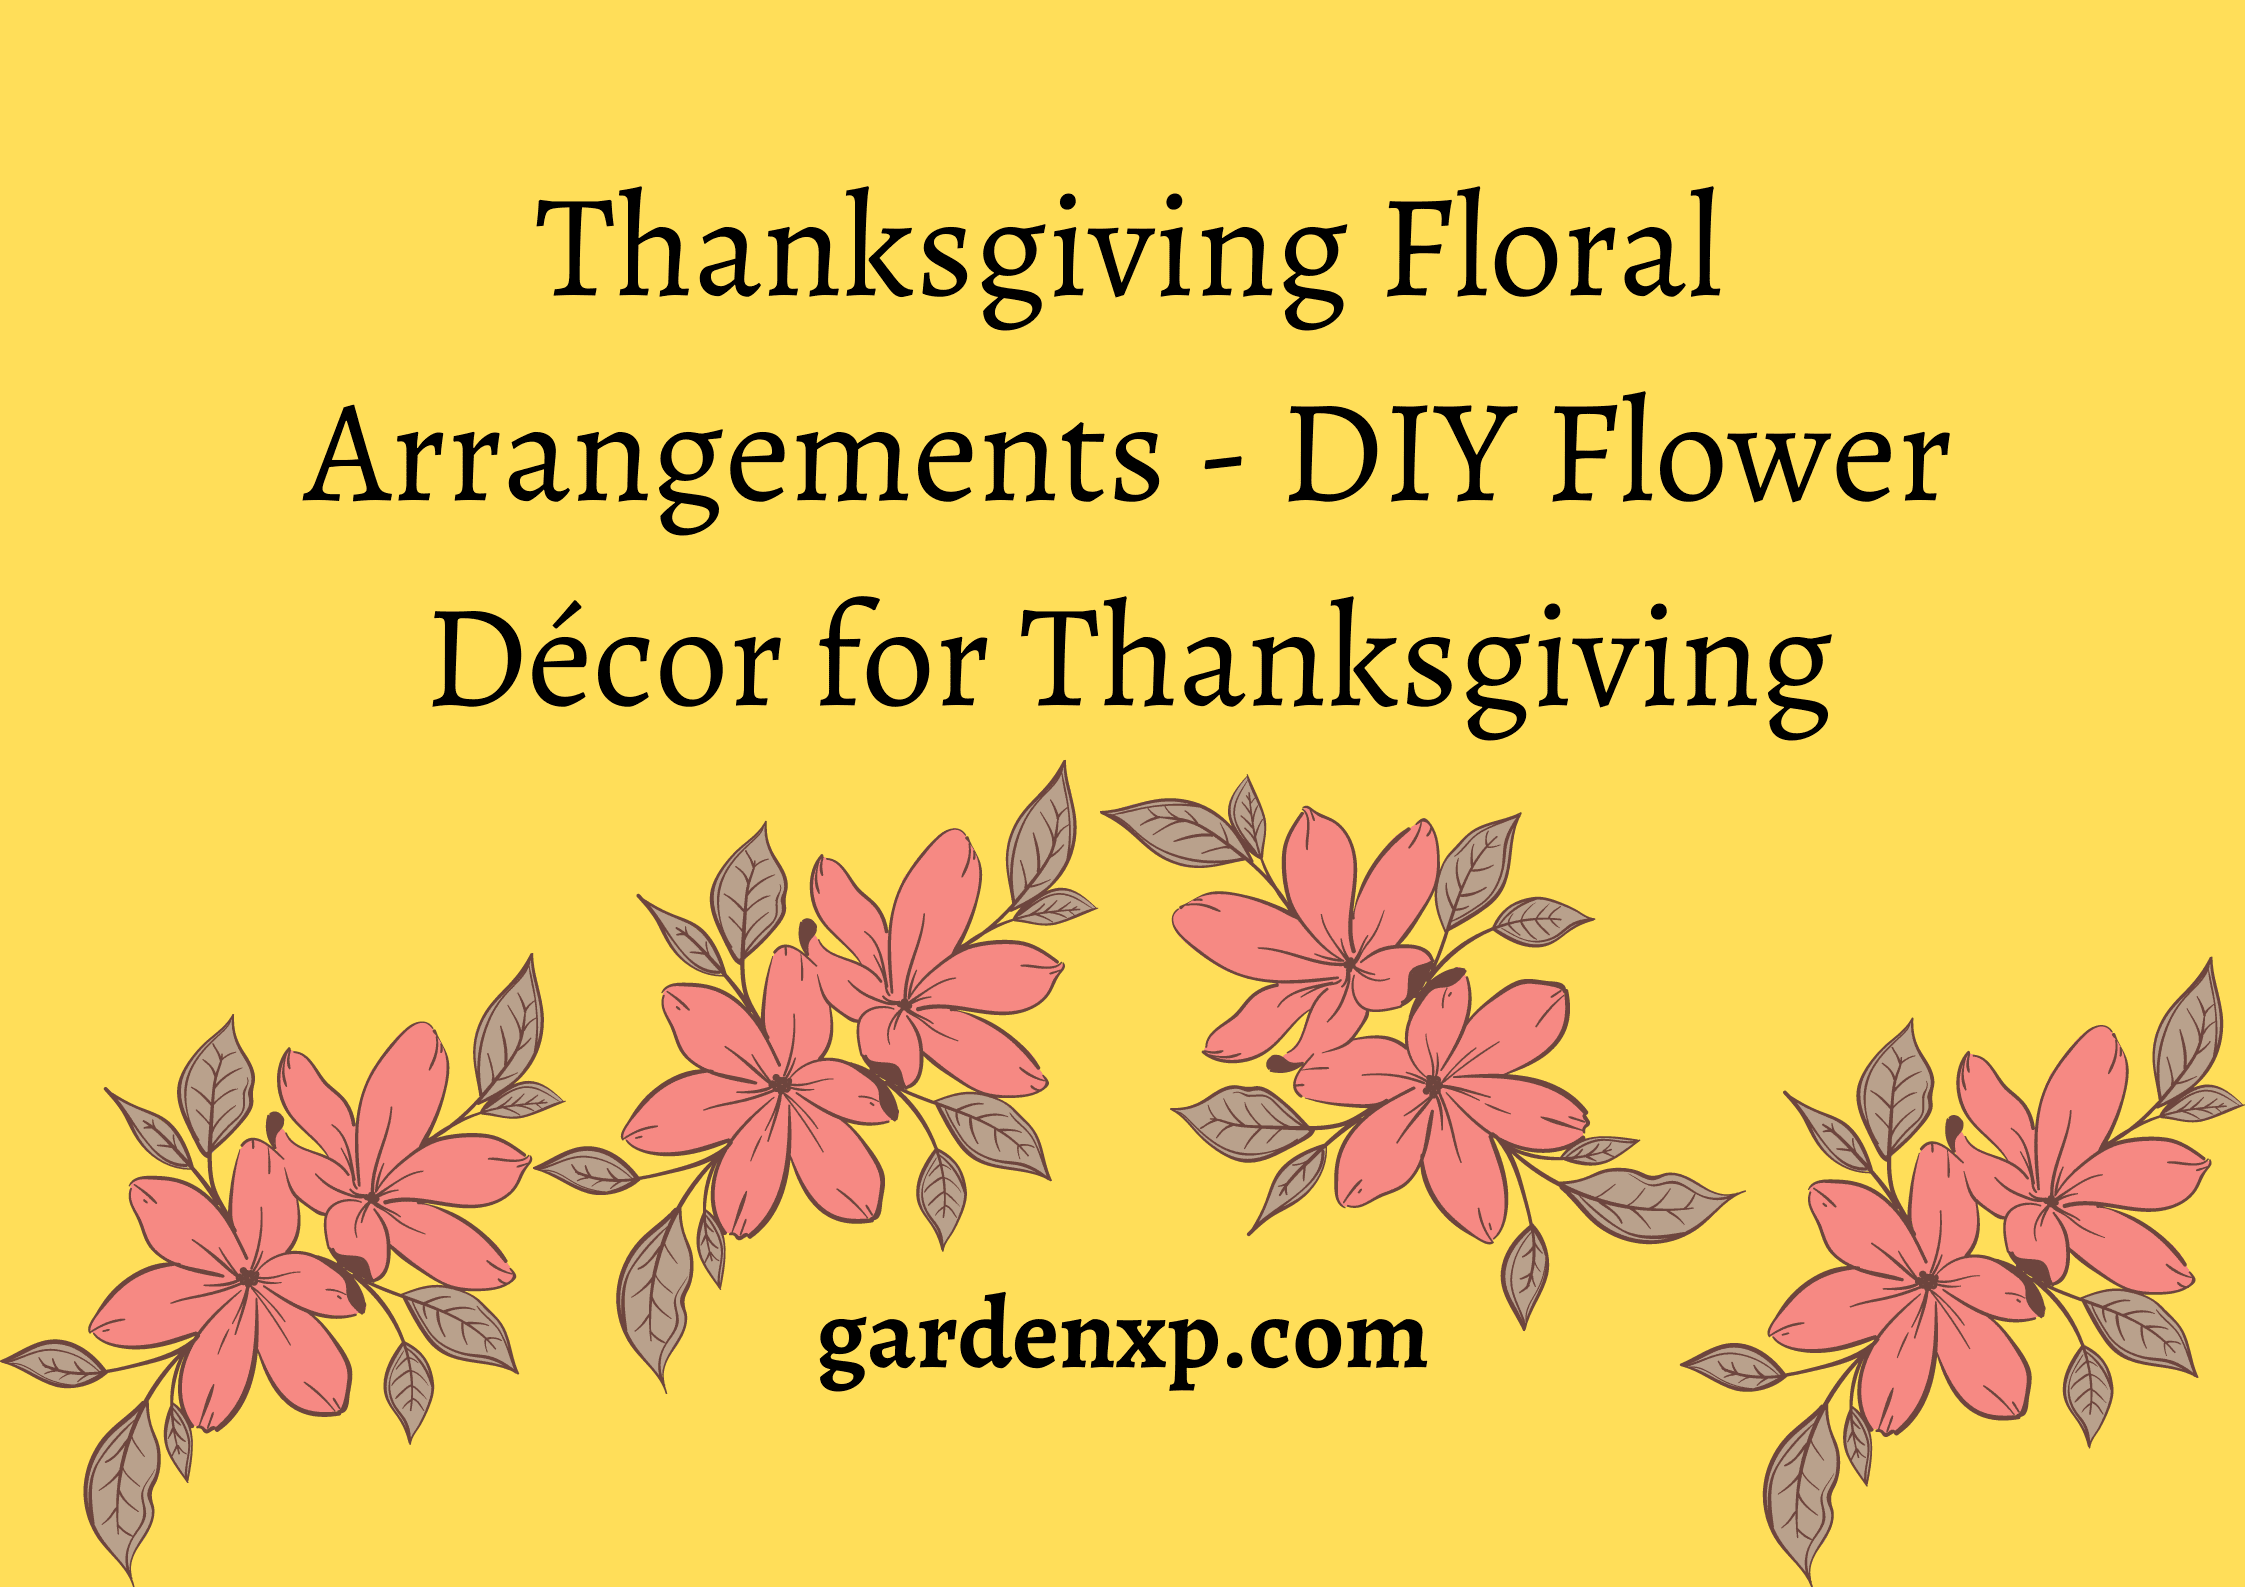 Thanksgiving Floral Arrangements - DIY Flower Décor for Thanksgiving